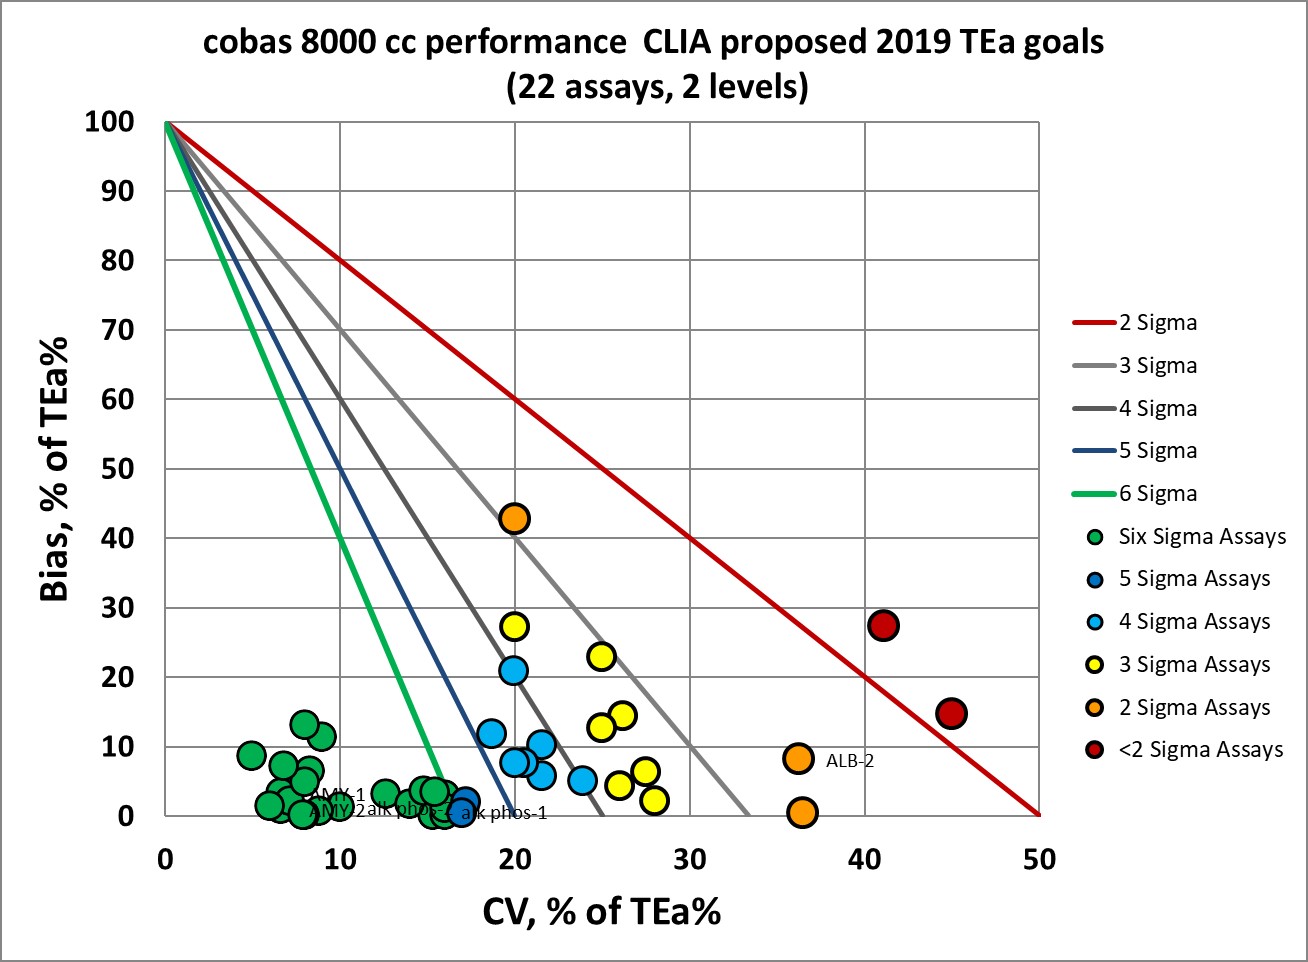  cobas 8000 clia proposed 2019 goals